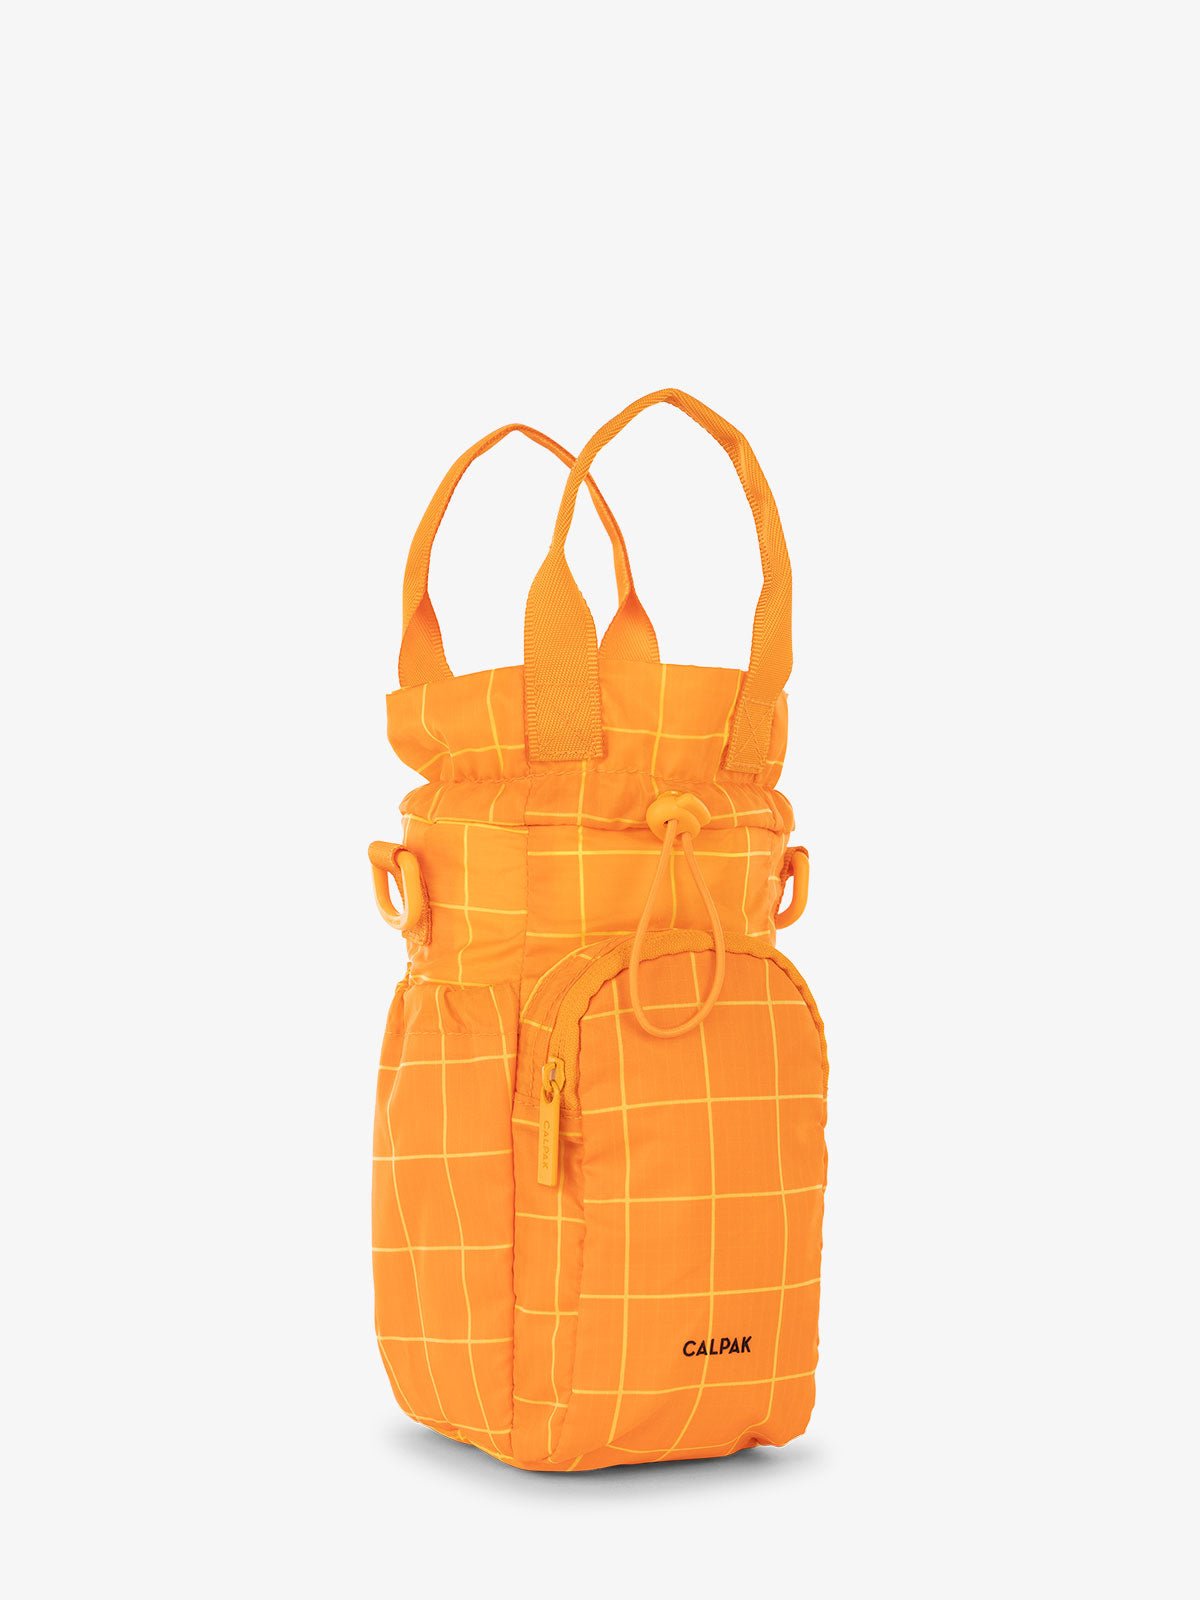 CALPAK Water Bottle Holder purse with zipped pocket for phone in orange grid